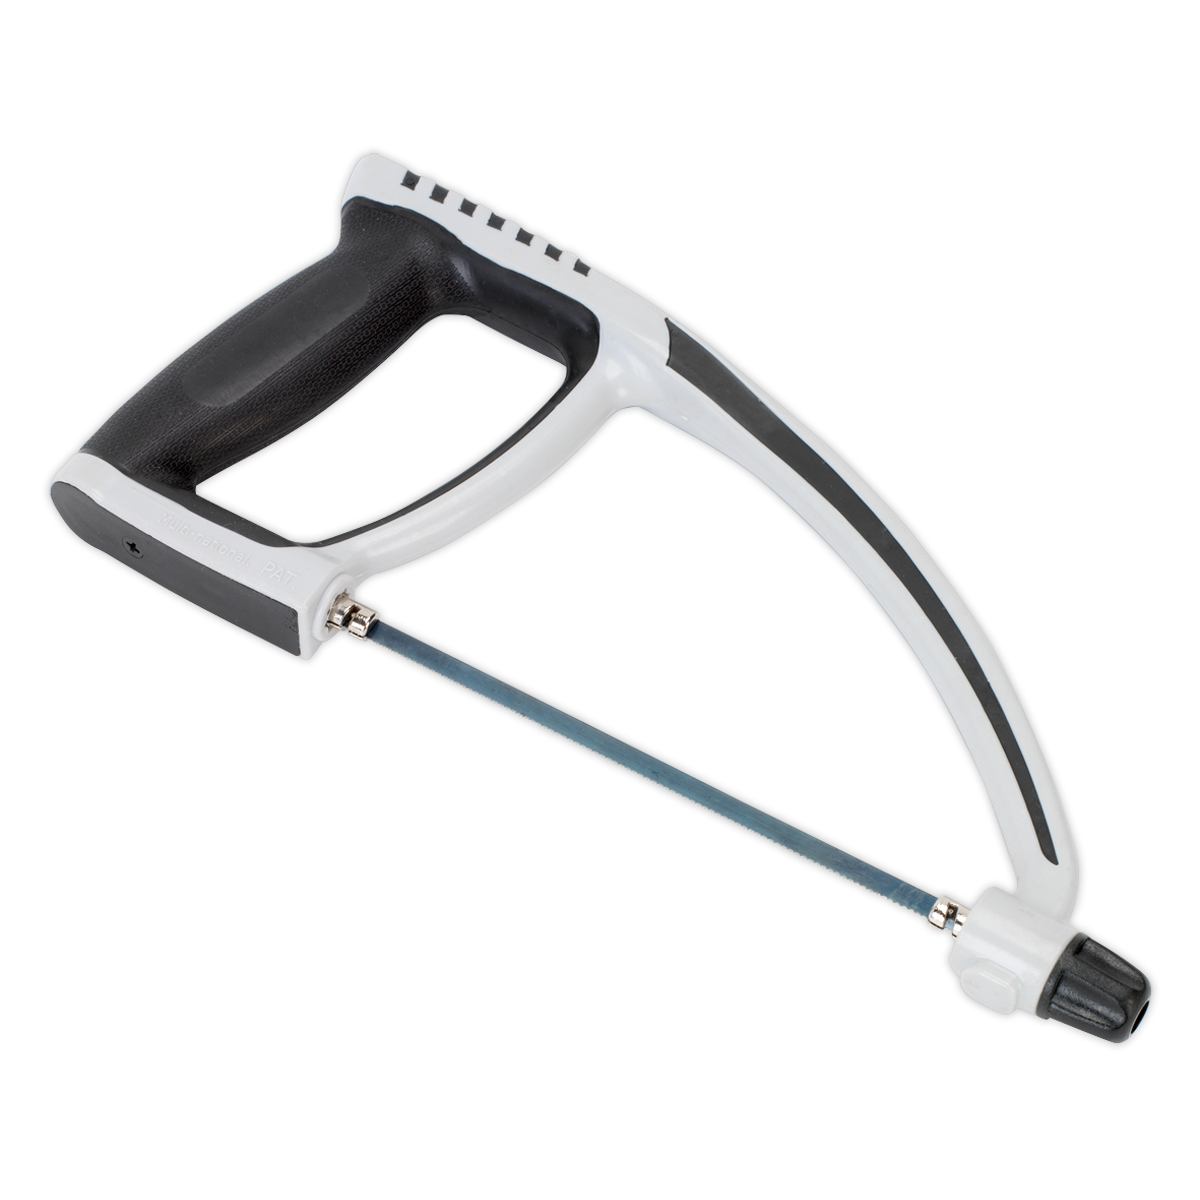 Sealey 150mm Mini Hacksaw with Adjustable Blade AK8683